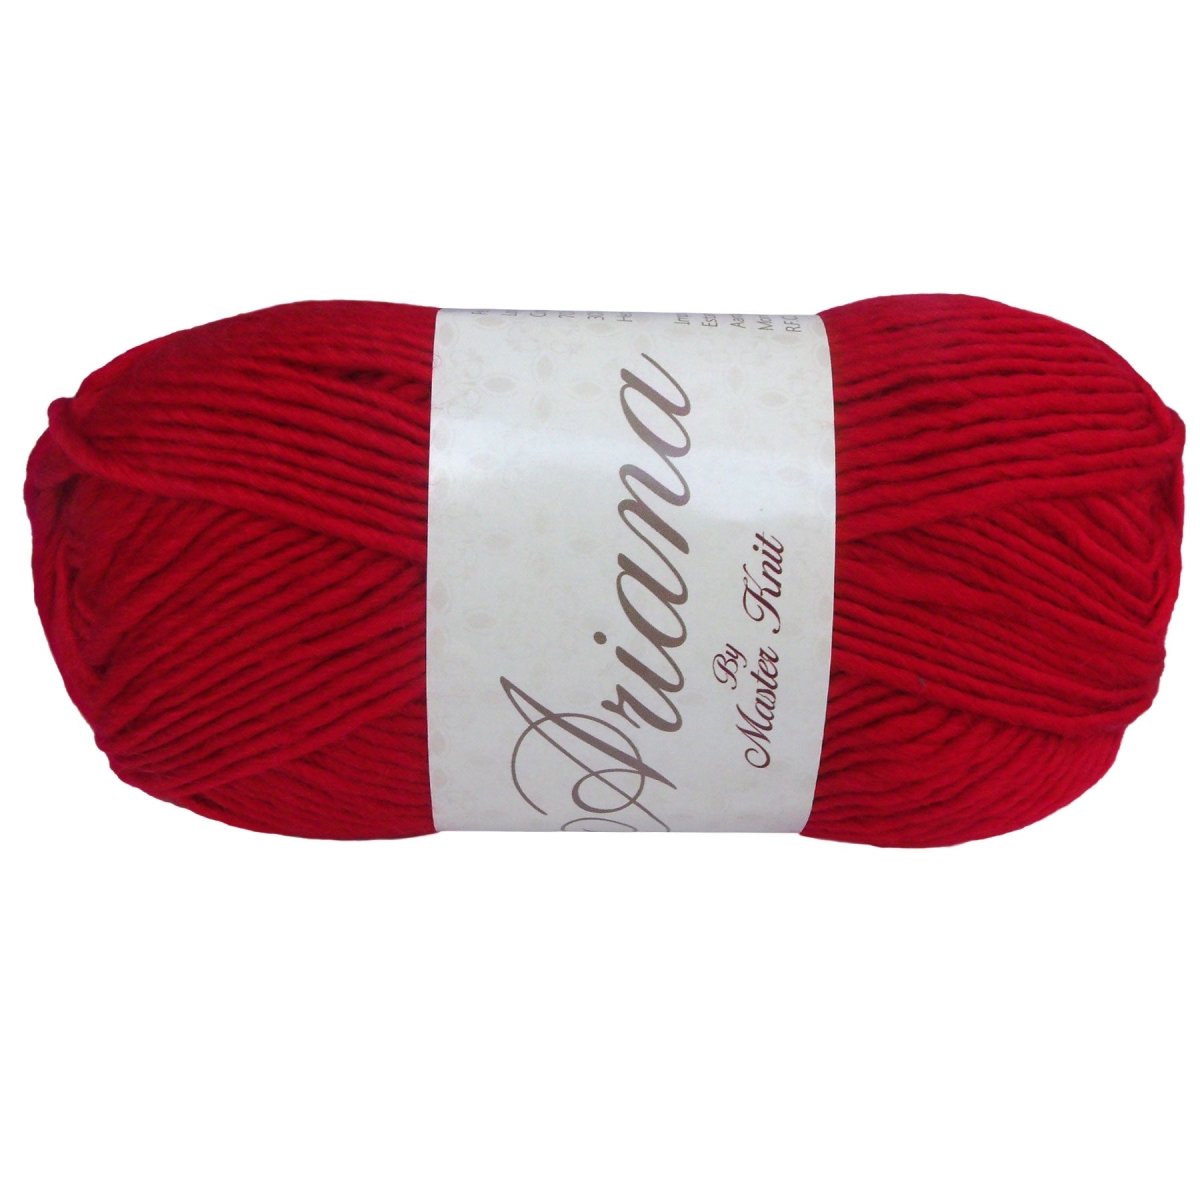 ARIANA - Aran - Crochetstores9510-175